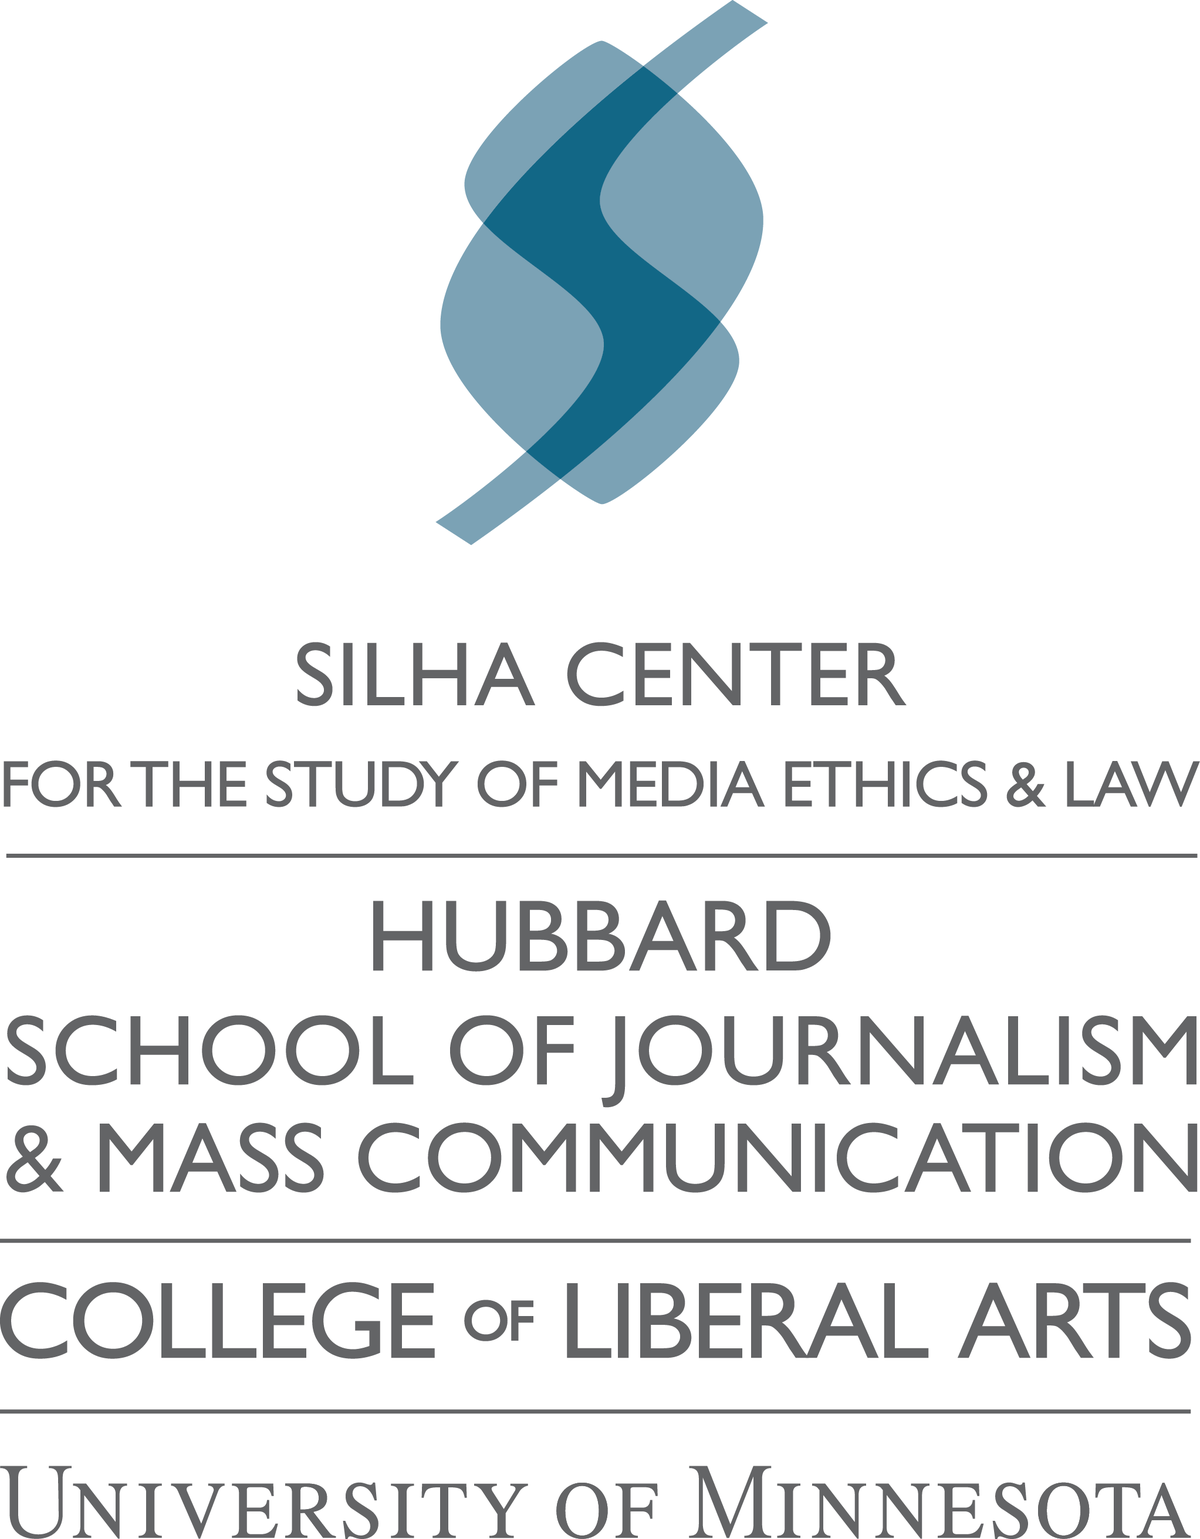 Silha Center logo